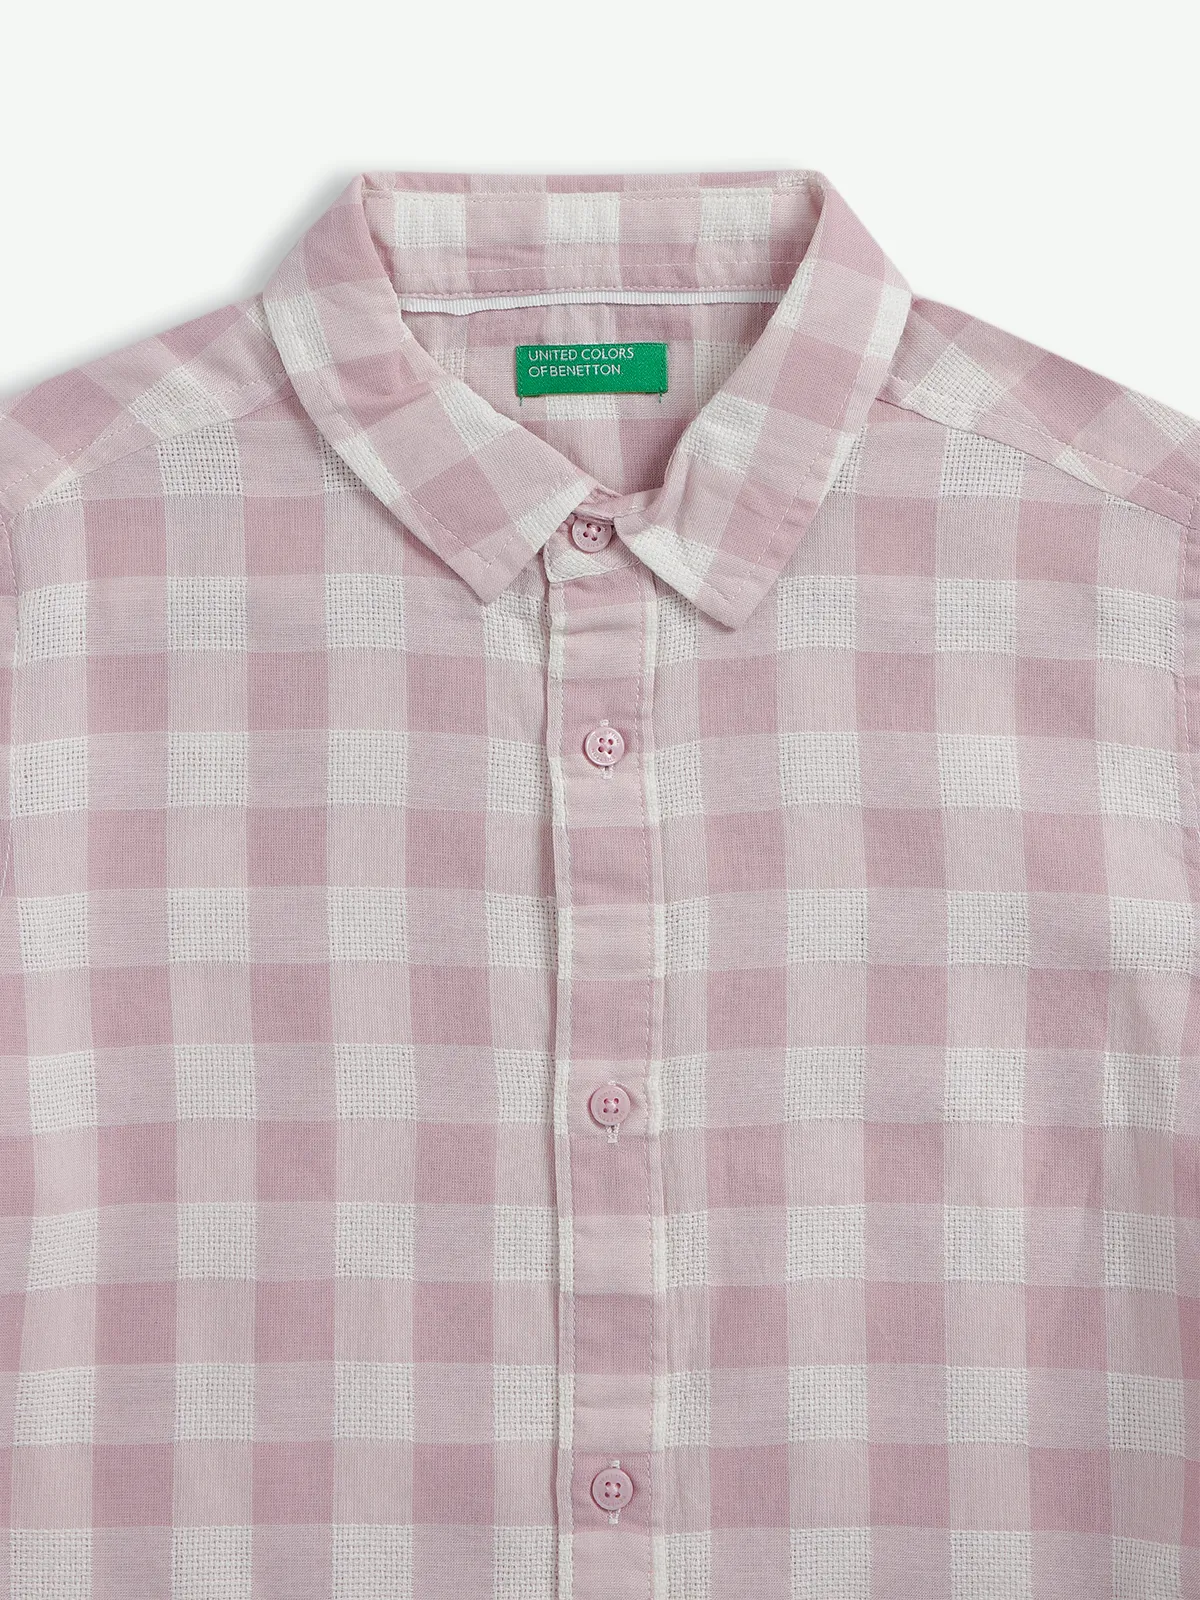 UCB onion pink checks cotton shirt